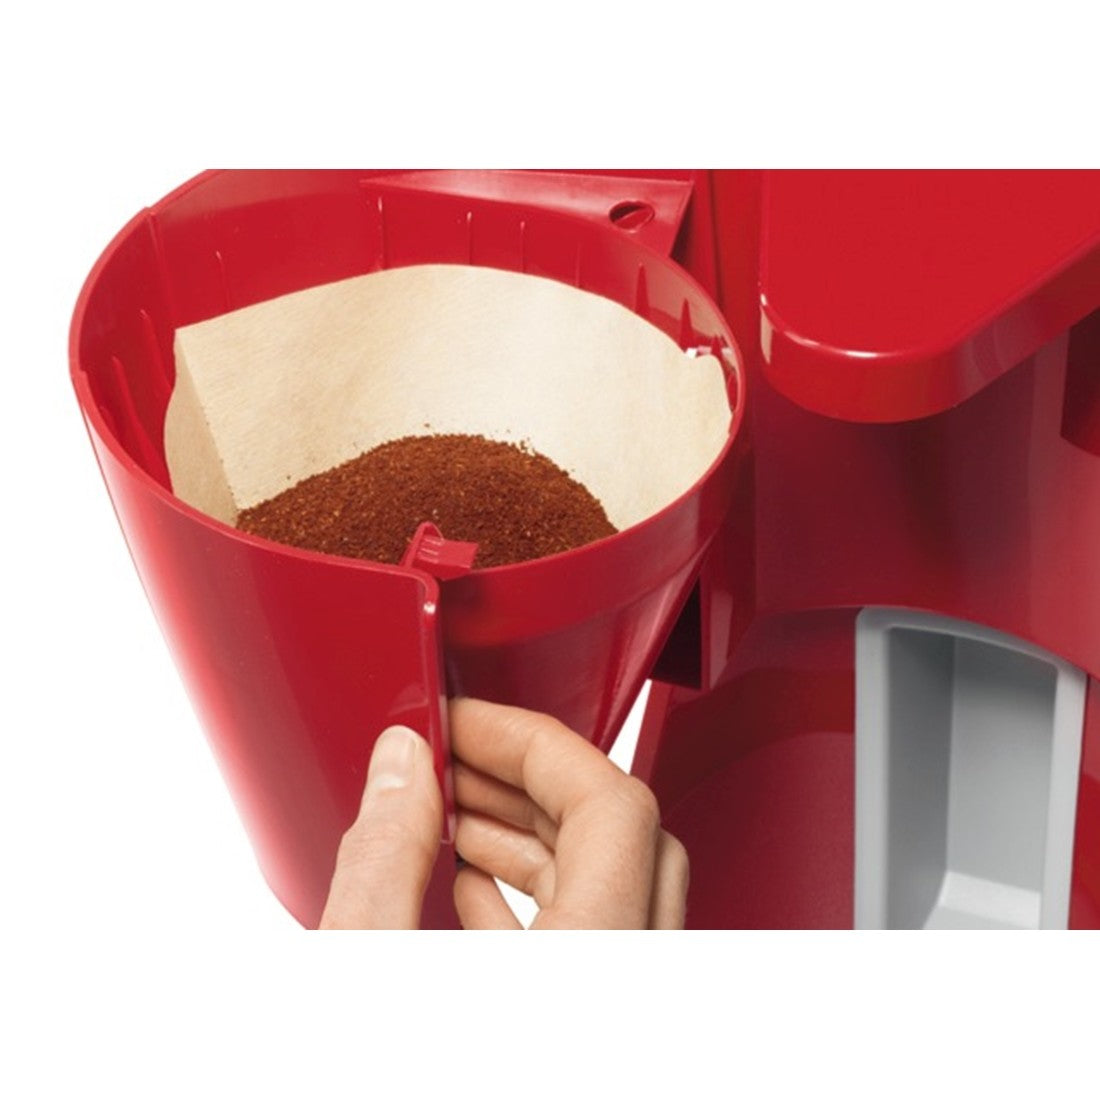 BOSCH Filter Coffee Machine CompactClass Extra TKA3A034 Red/Light gray